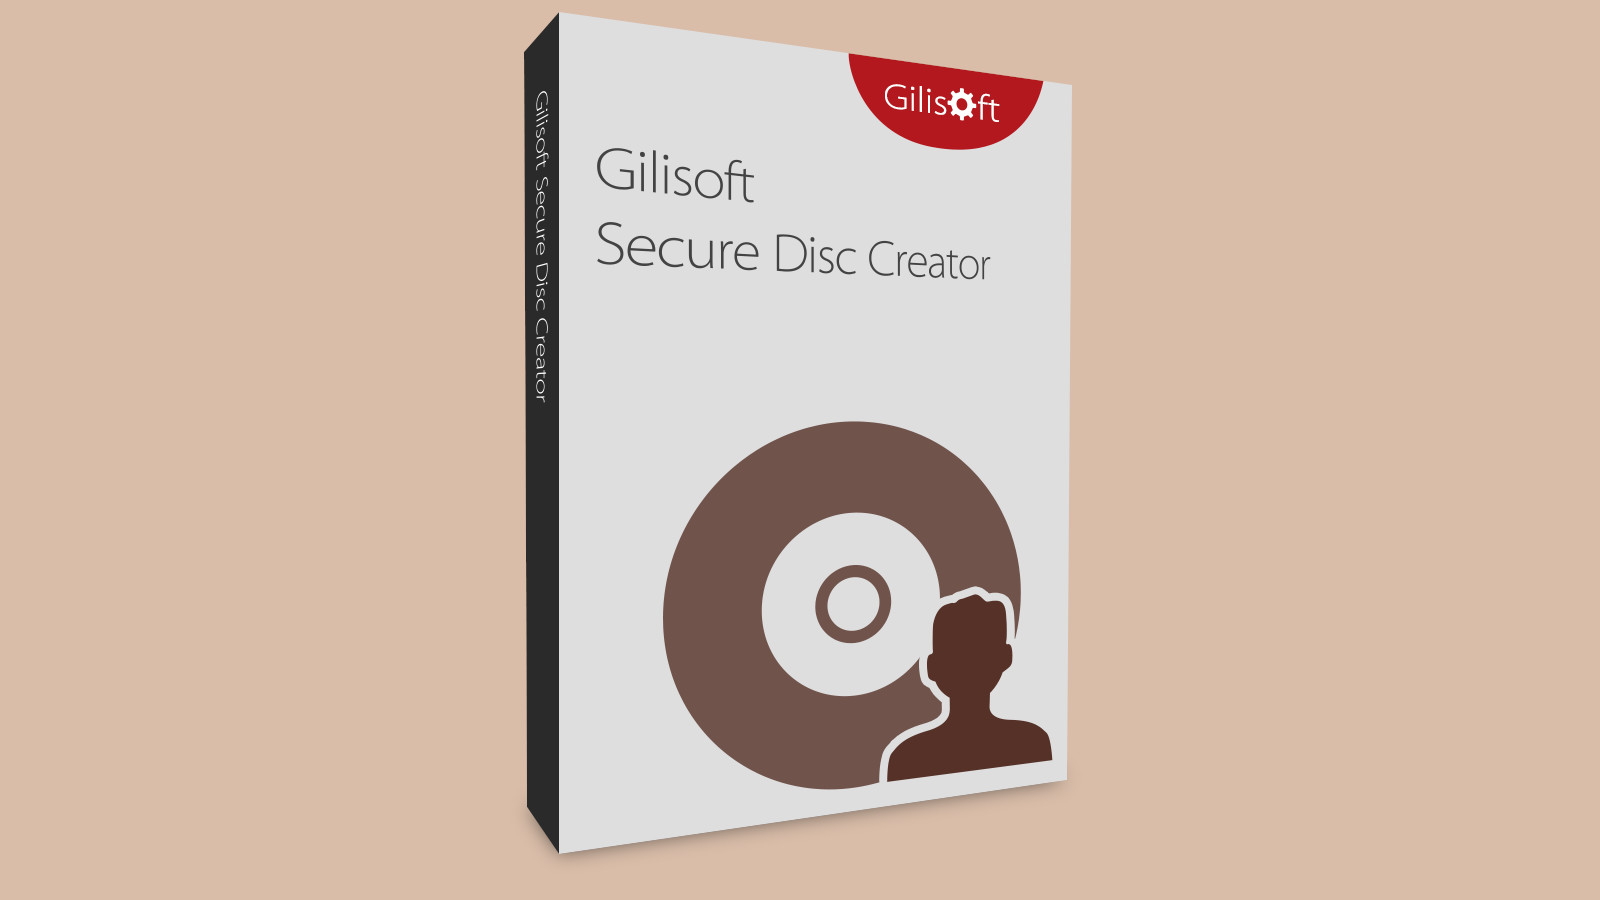 Gilisoft Secure Disc Creator CD Key 6.84 usd